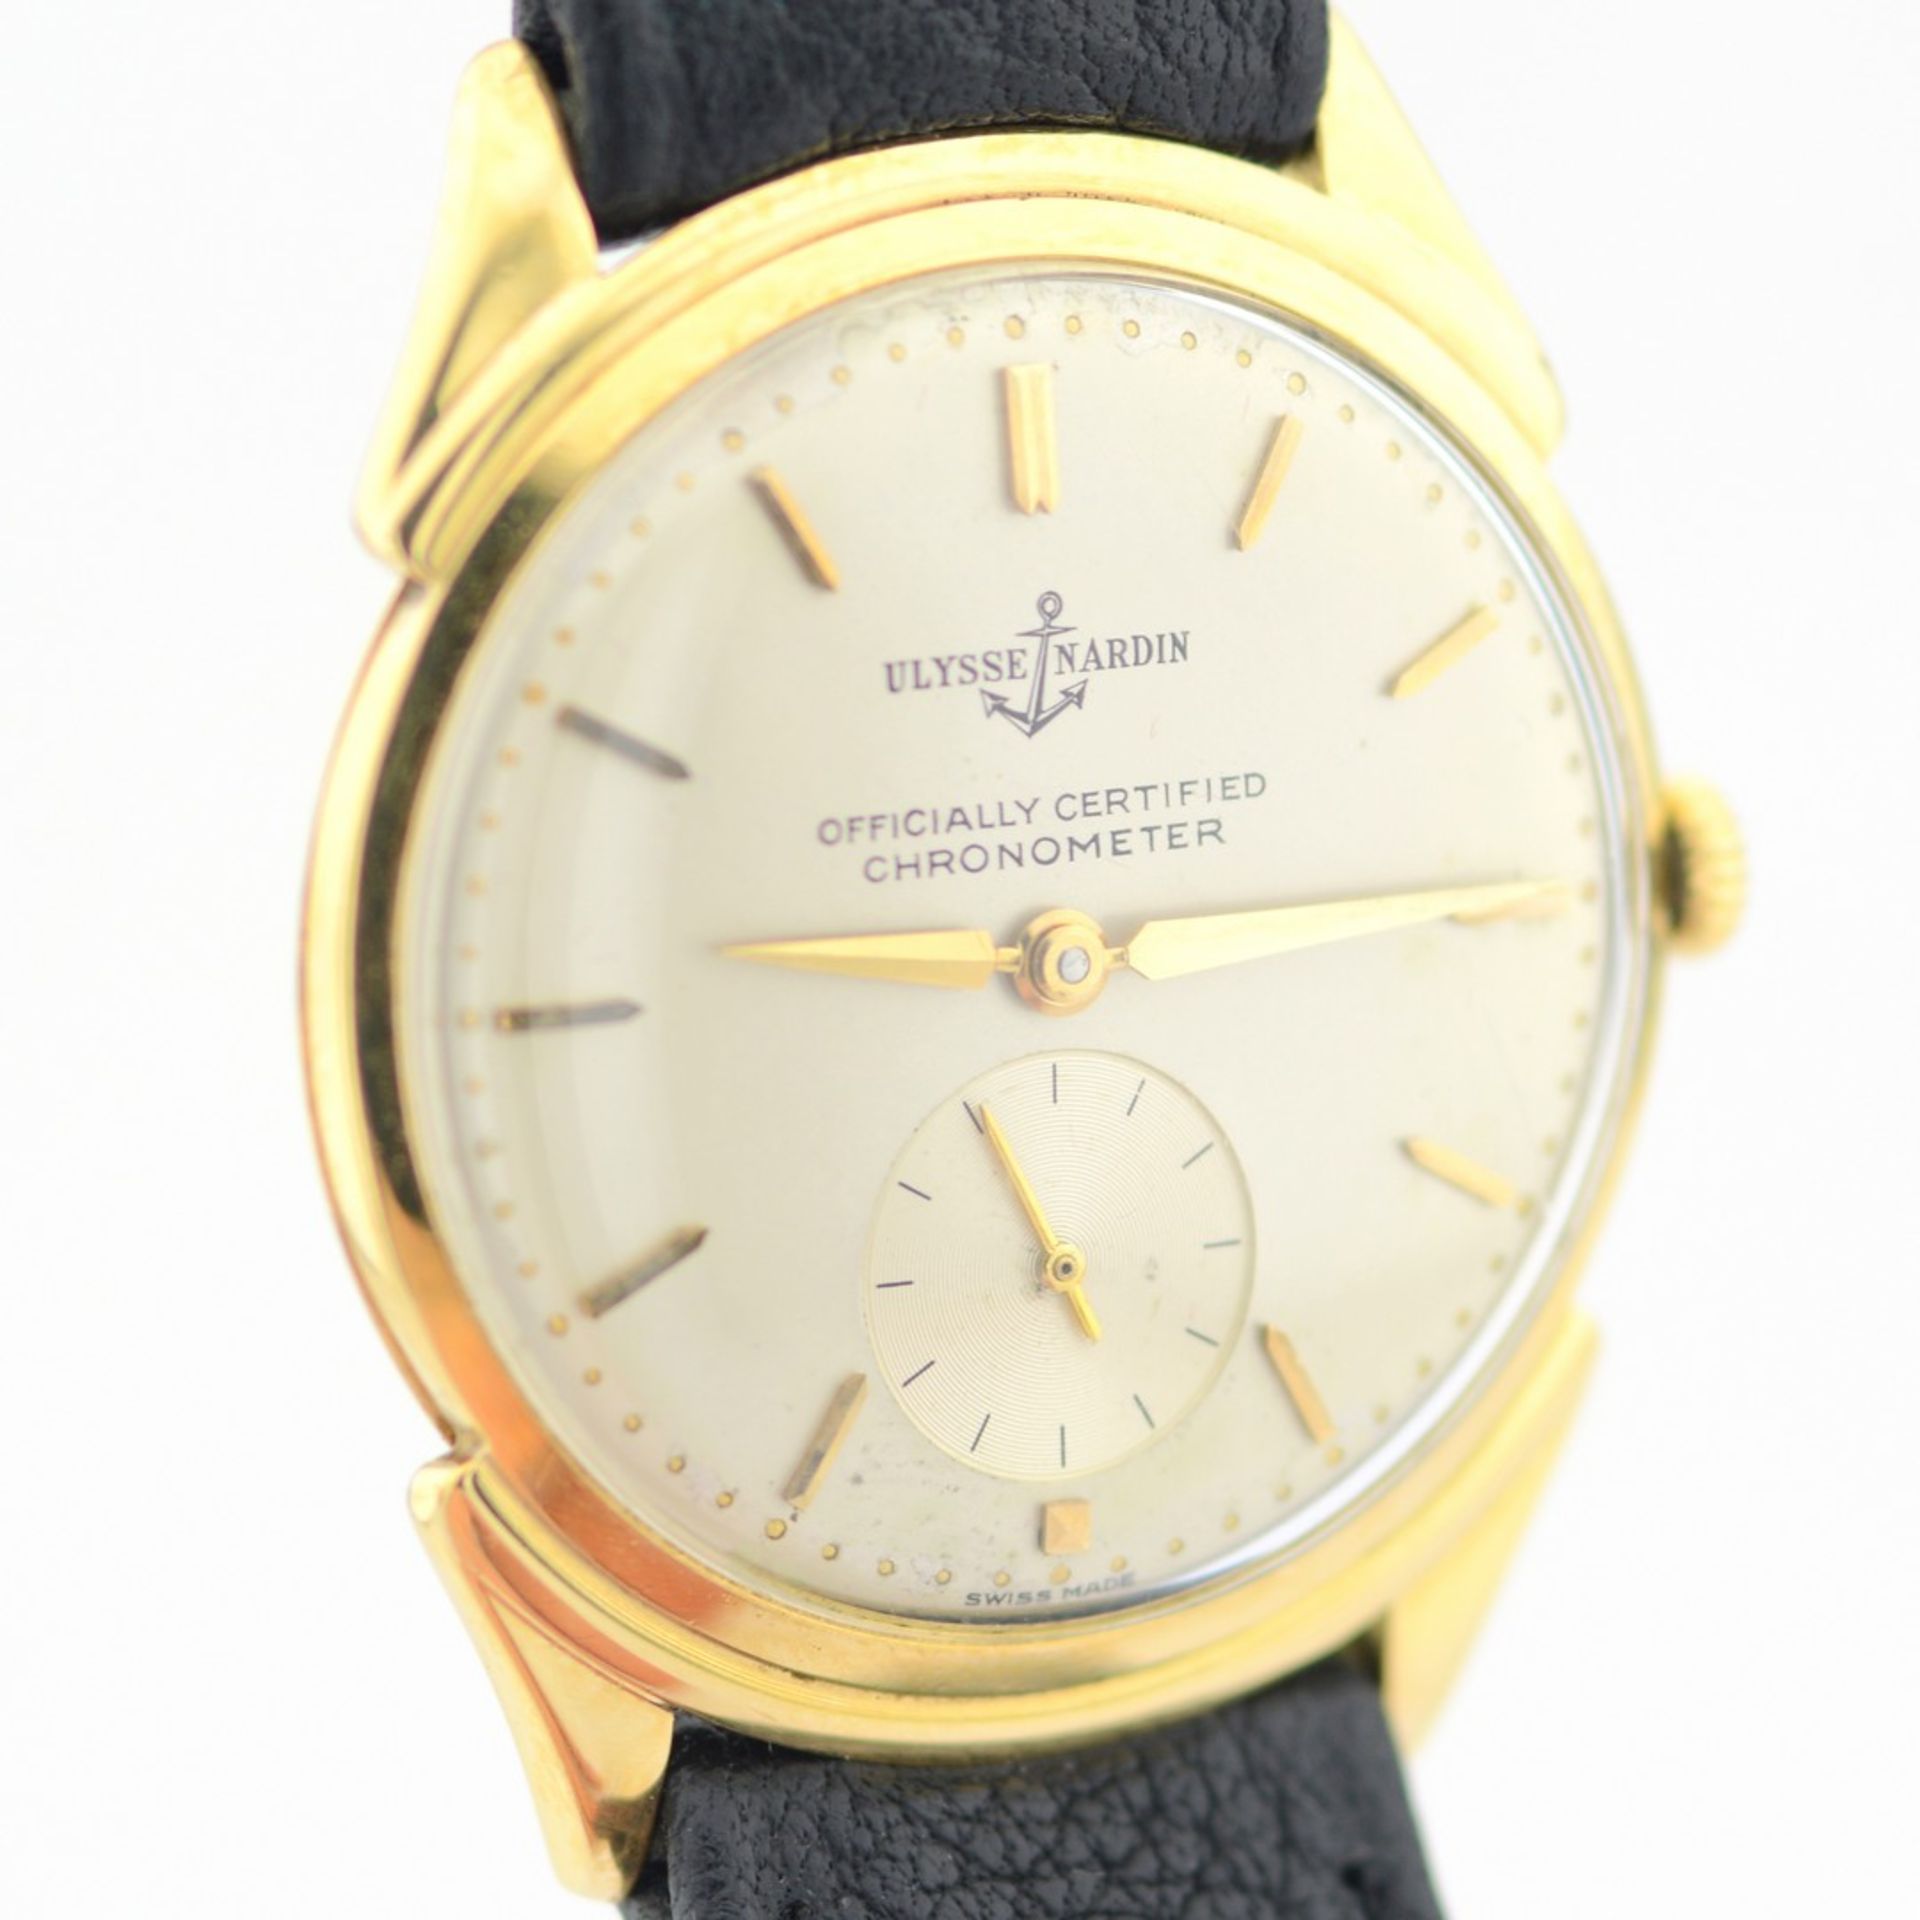 Ulysse Nardin / Chronometer 18K - Gentlemen's Yellow Gold Wristwatch - Image 8 of 8